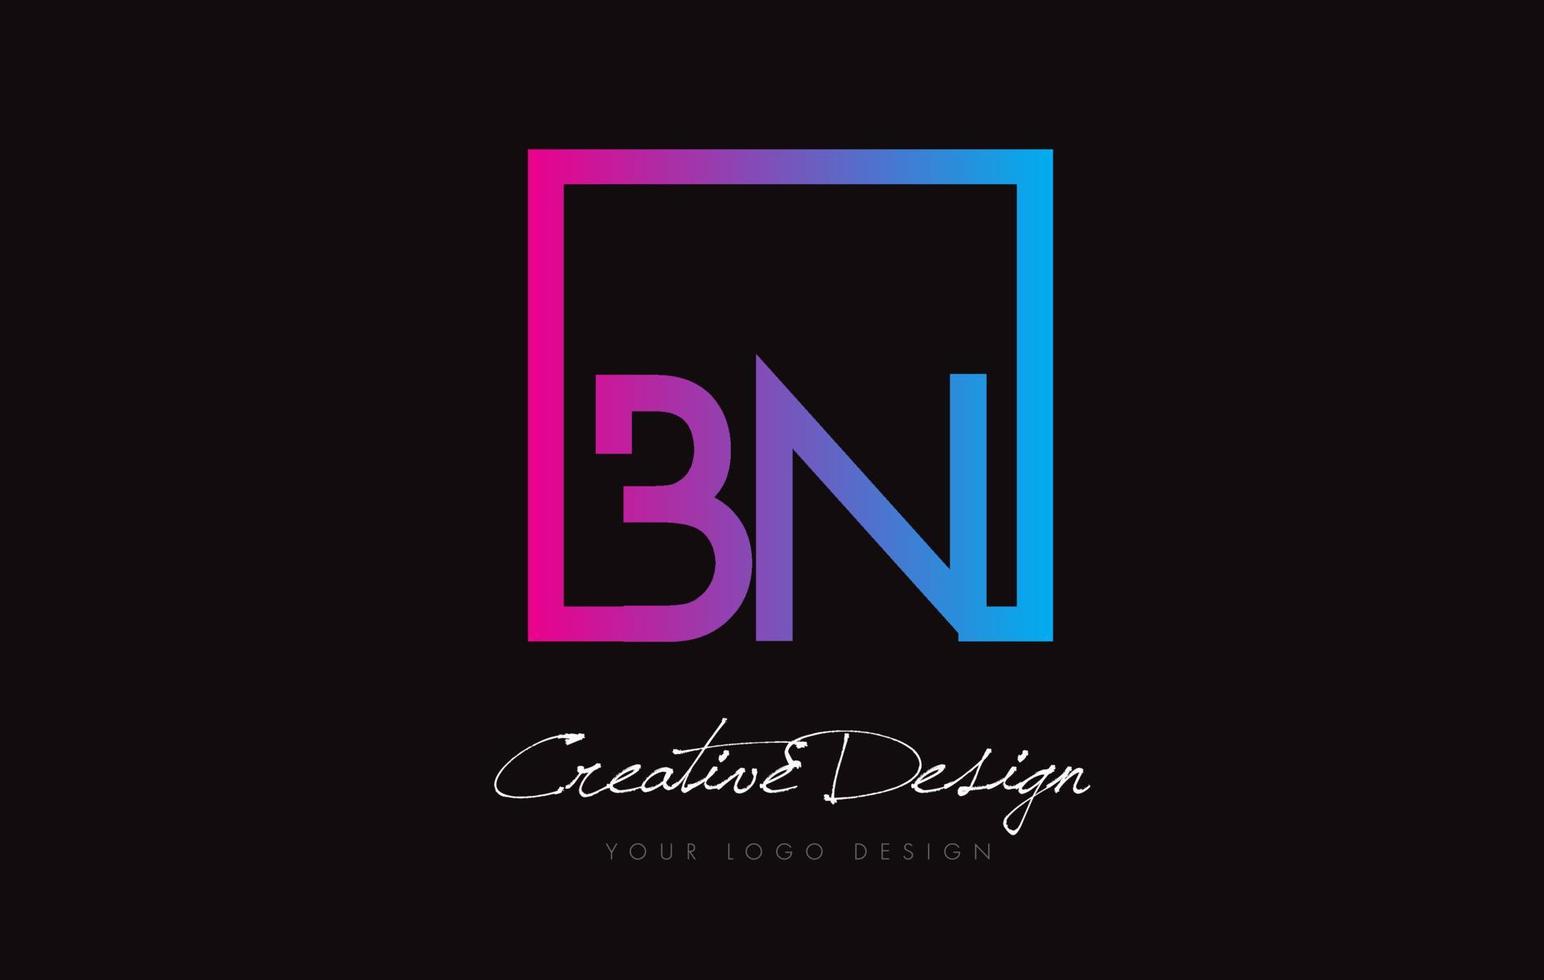 BN Square Frame Letter Logo Design with Purple Blue Colors. vector